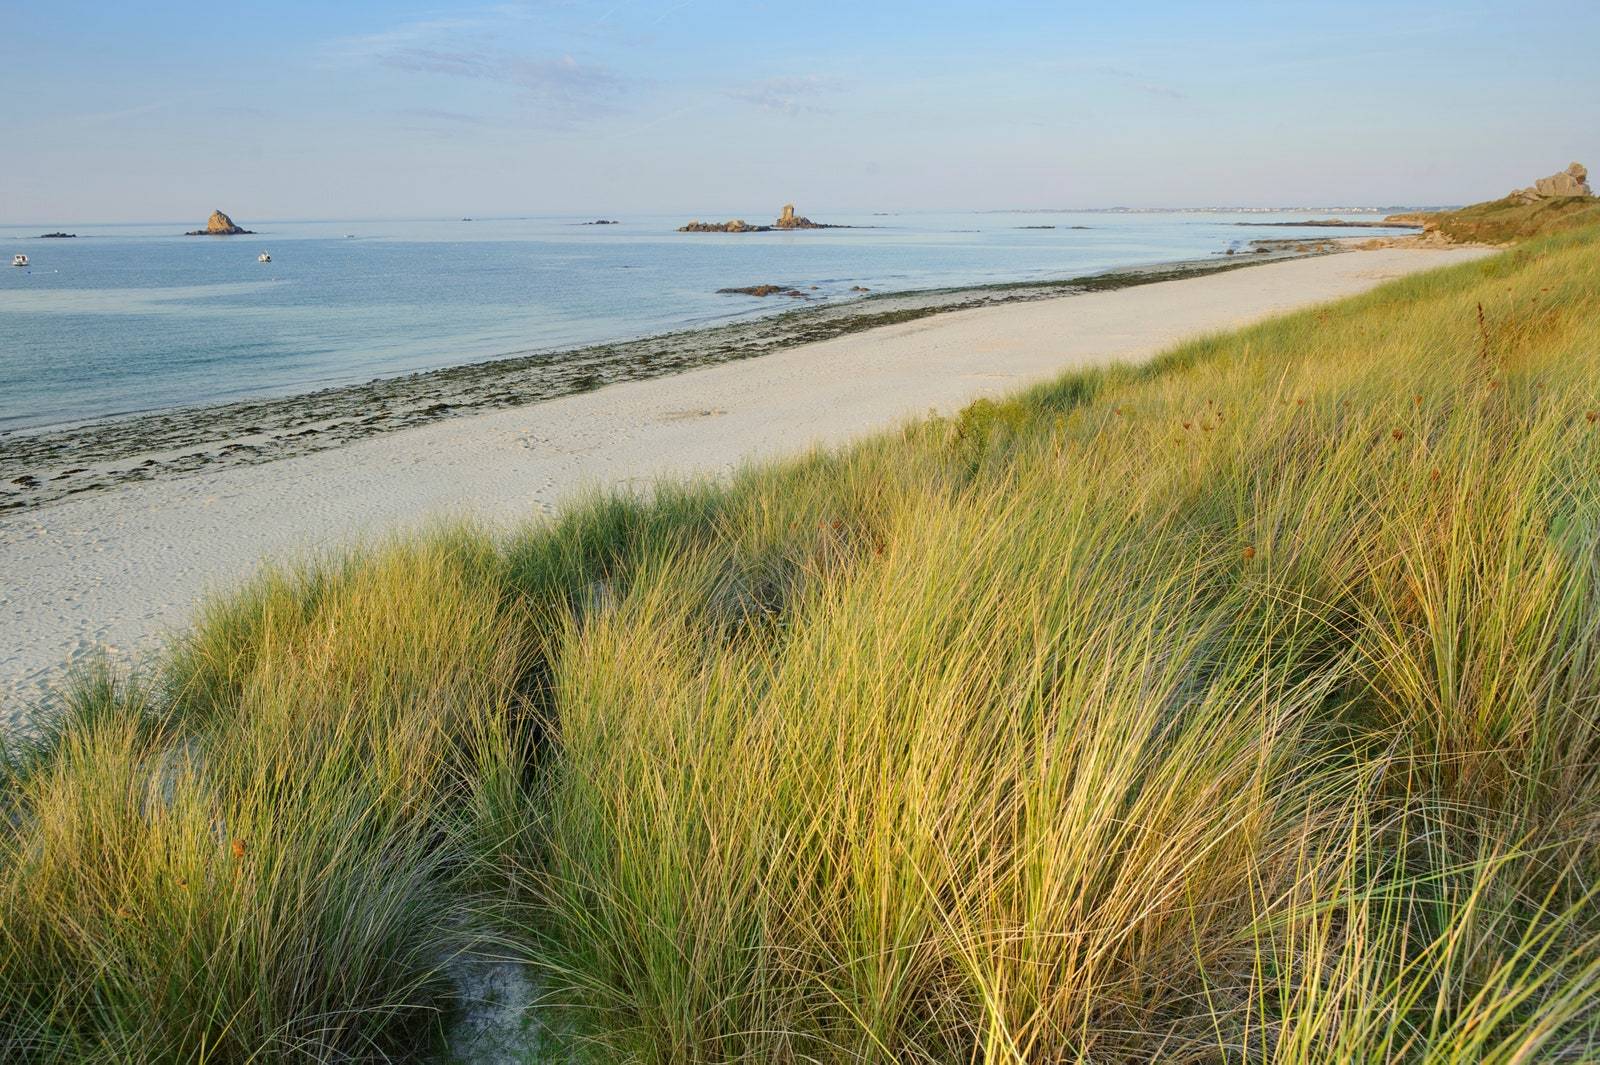  Plaża Keremma, Getty Images